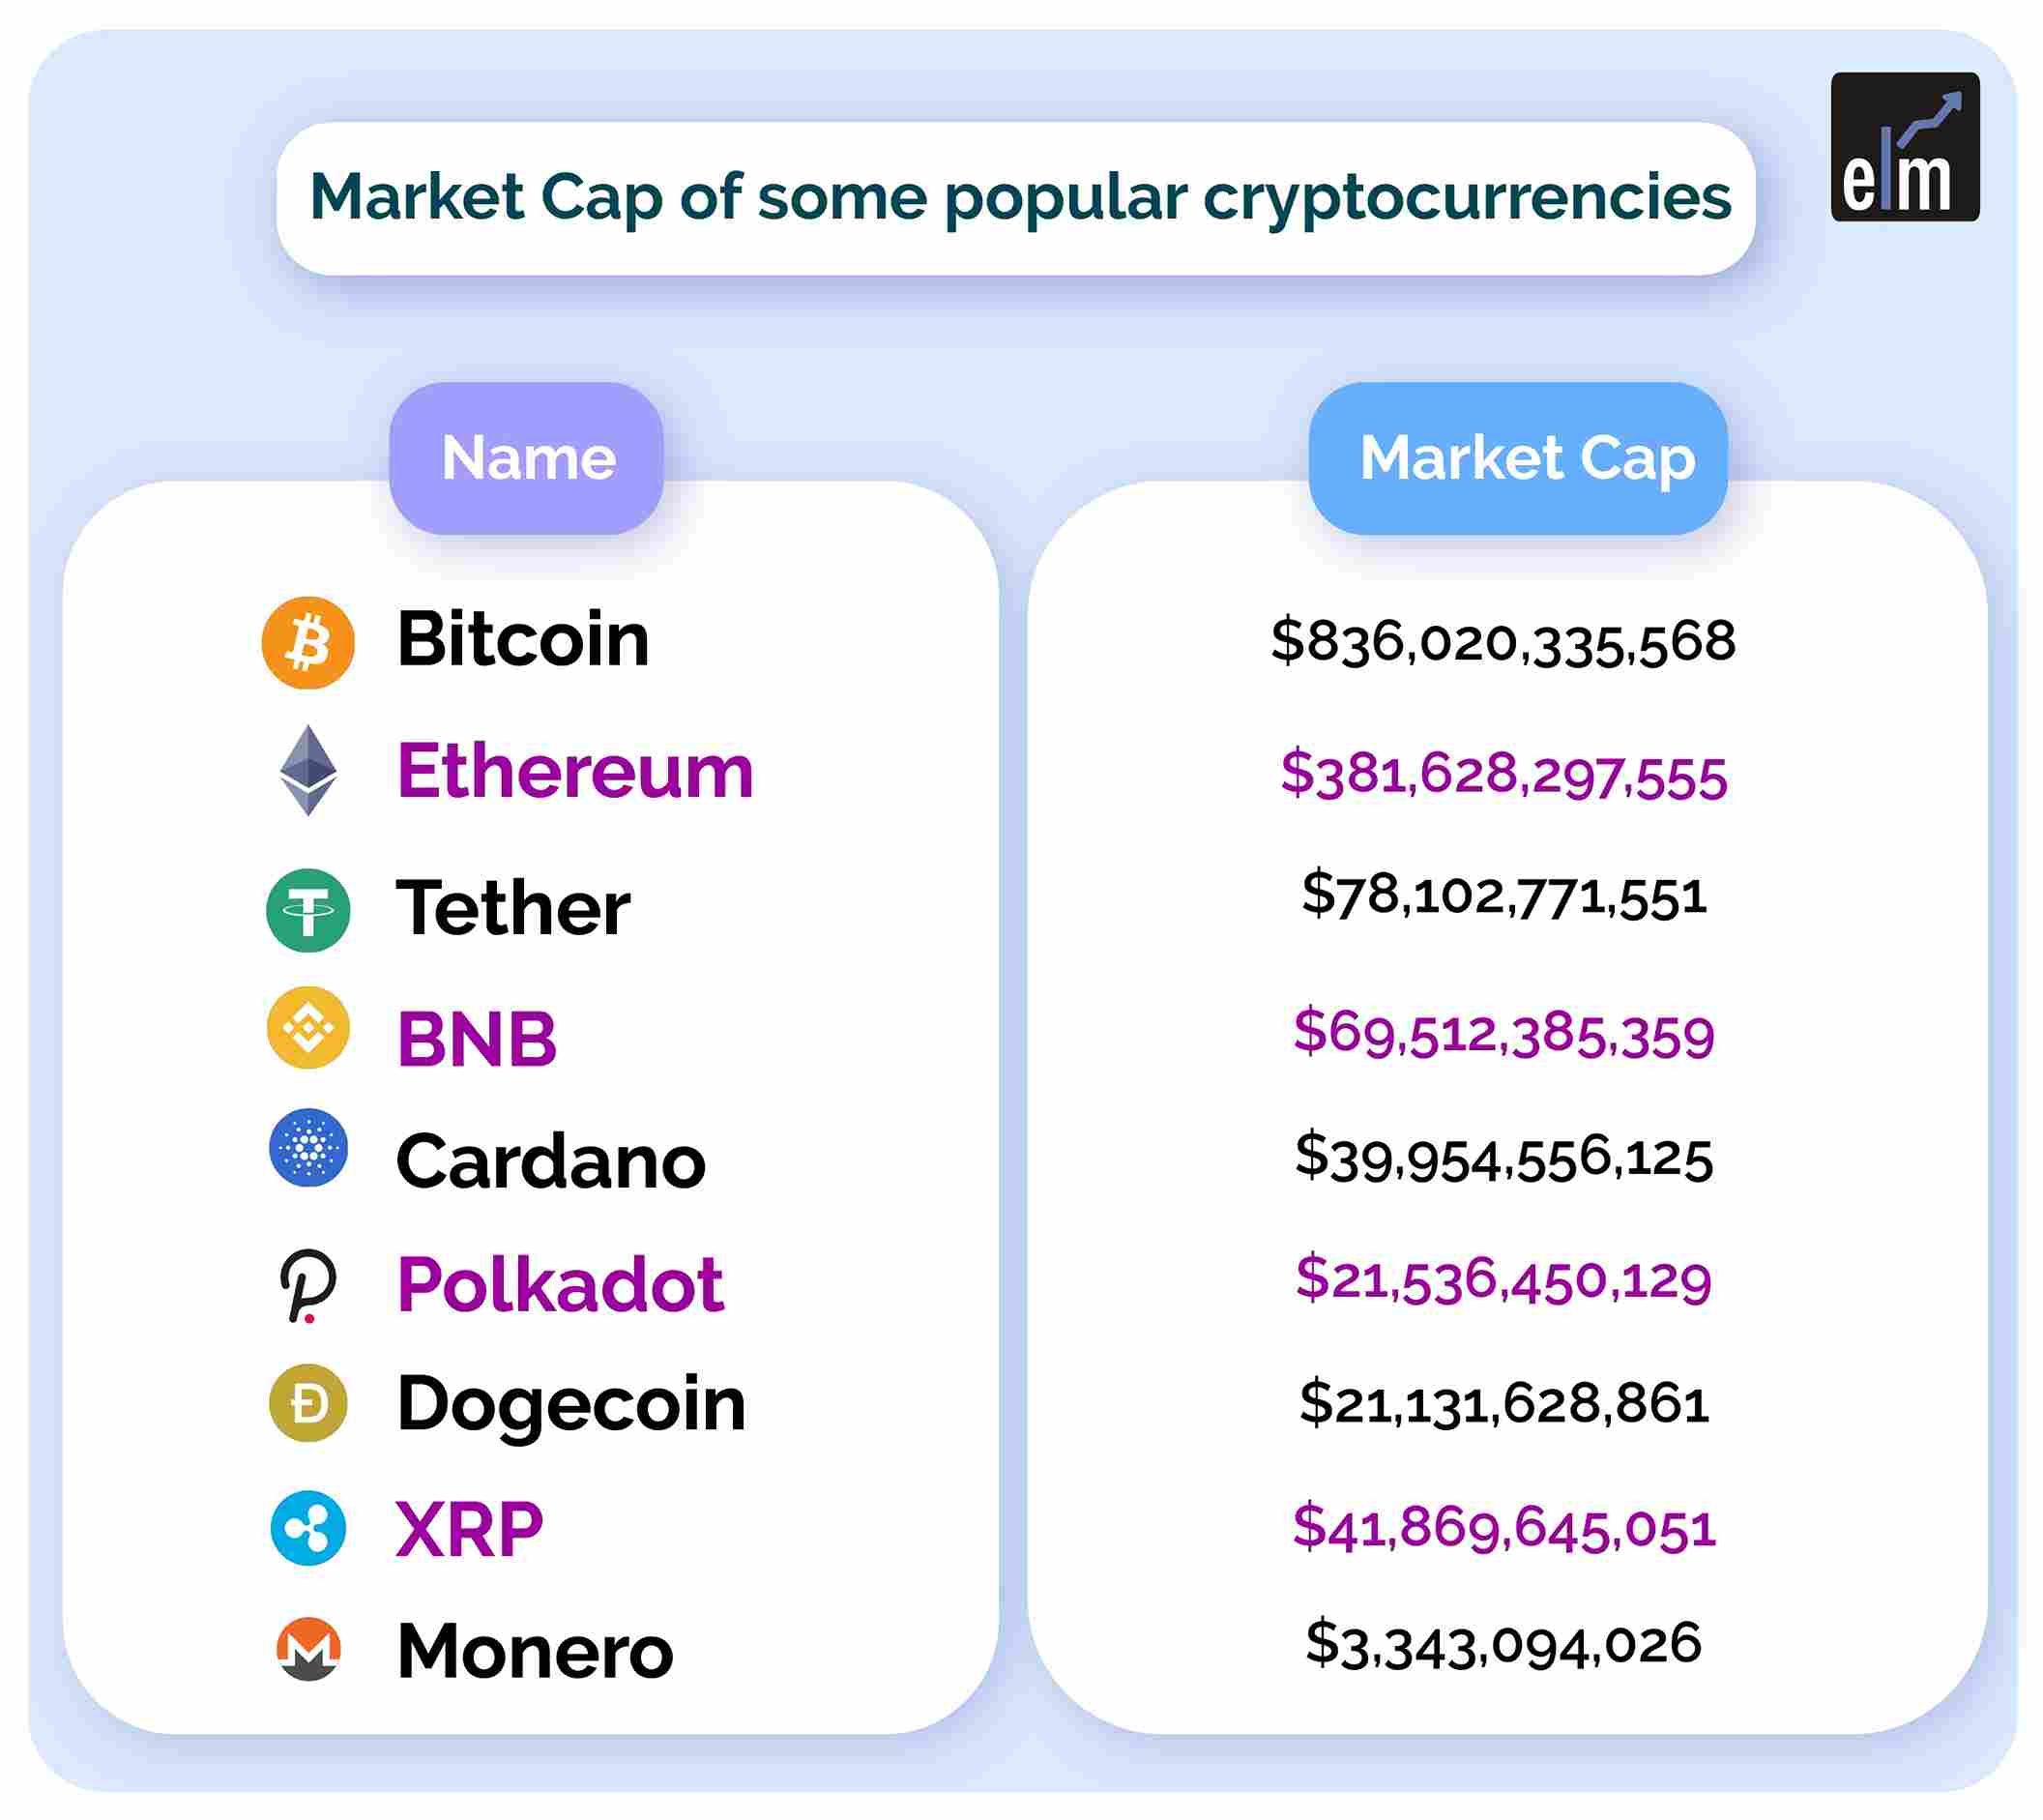 Market Cap of some popular cryptocurrencies